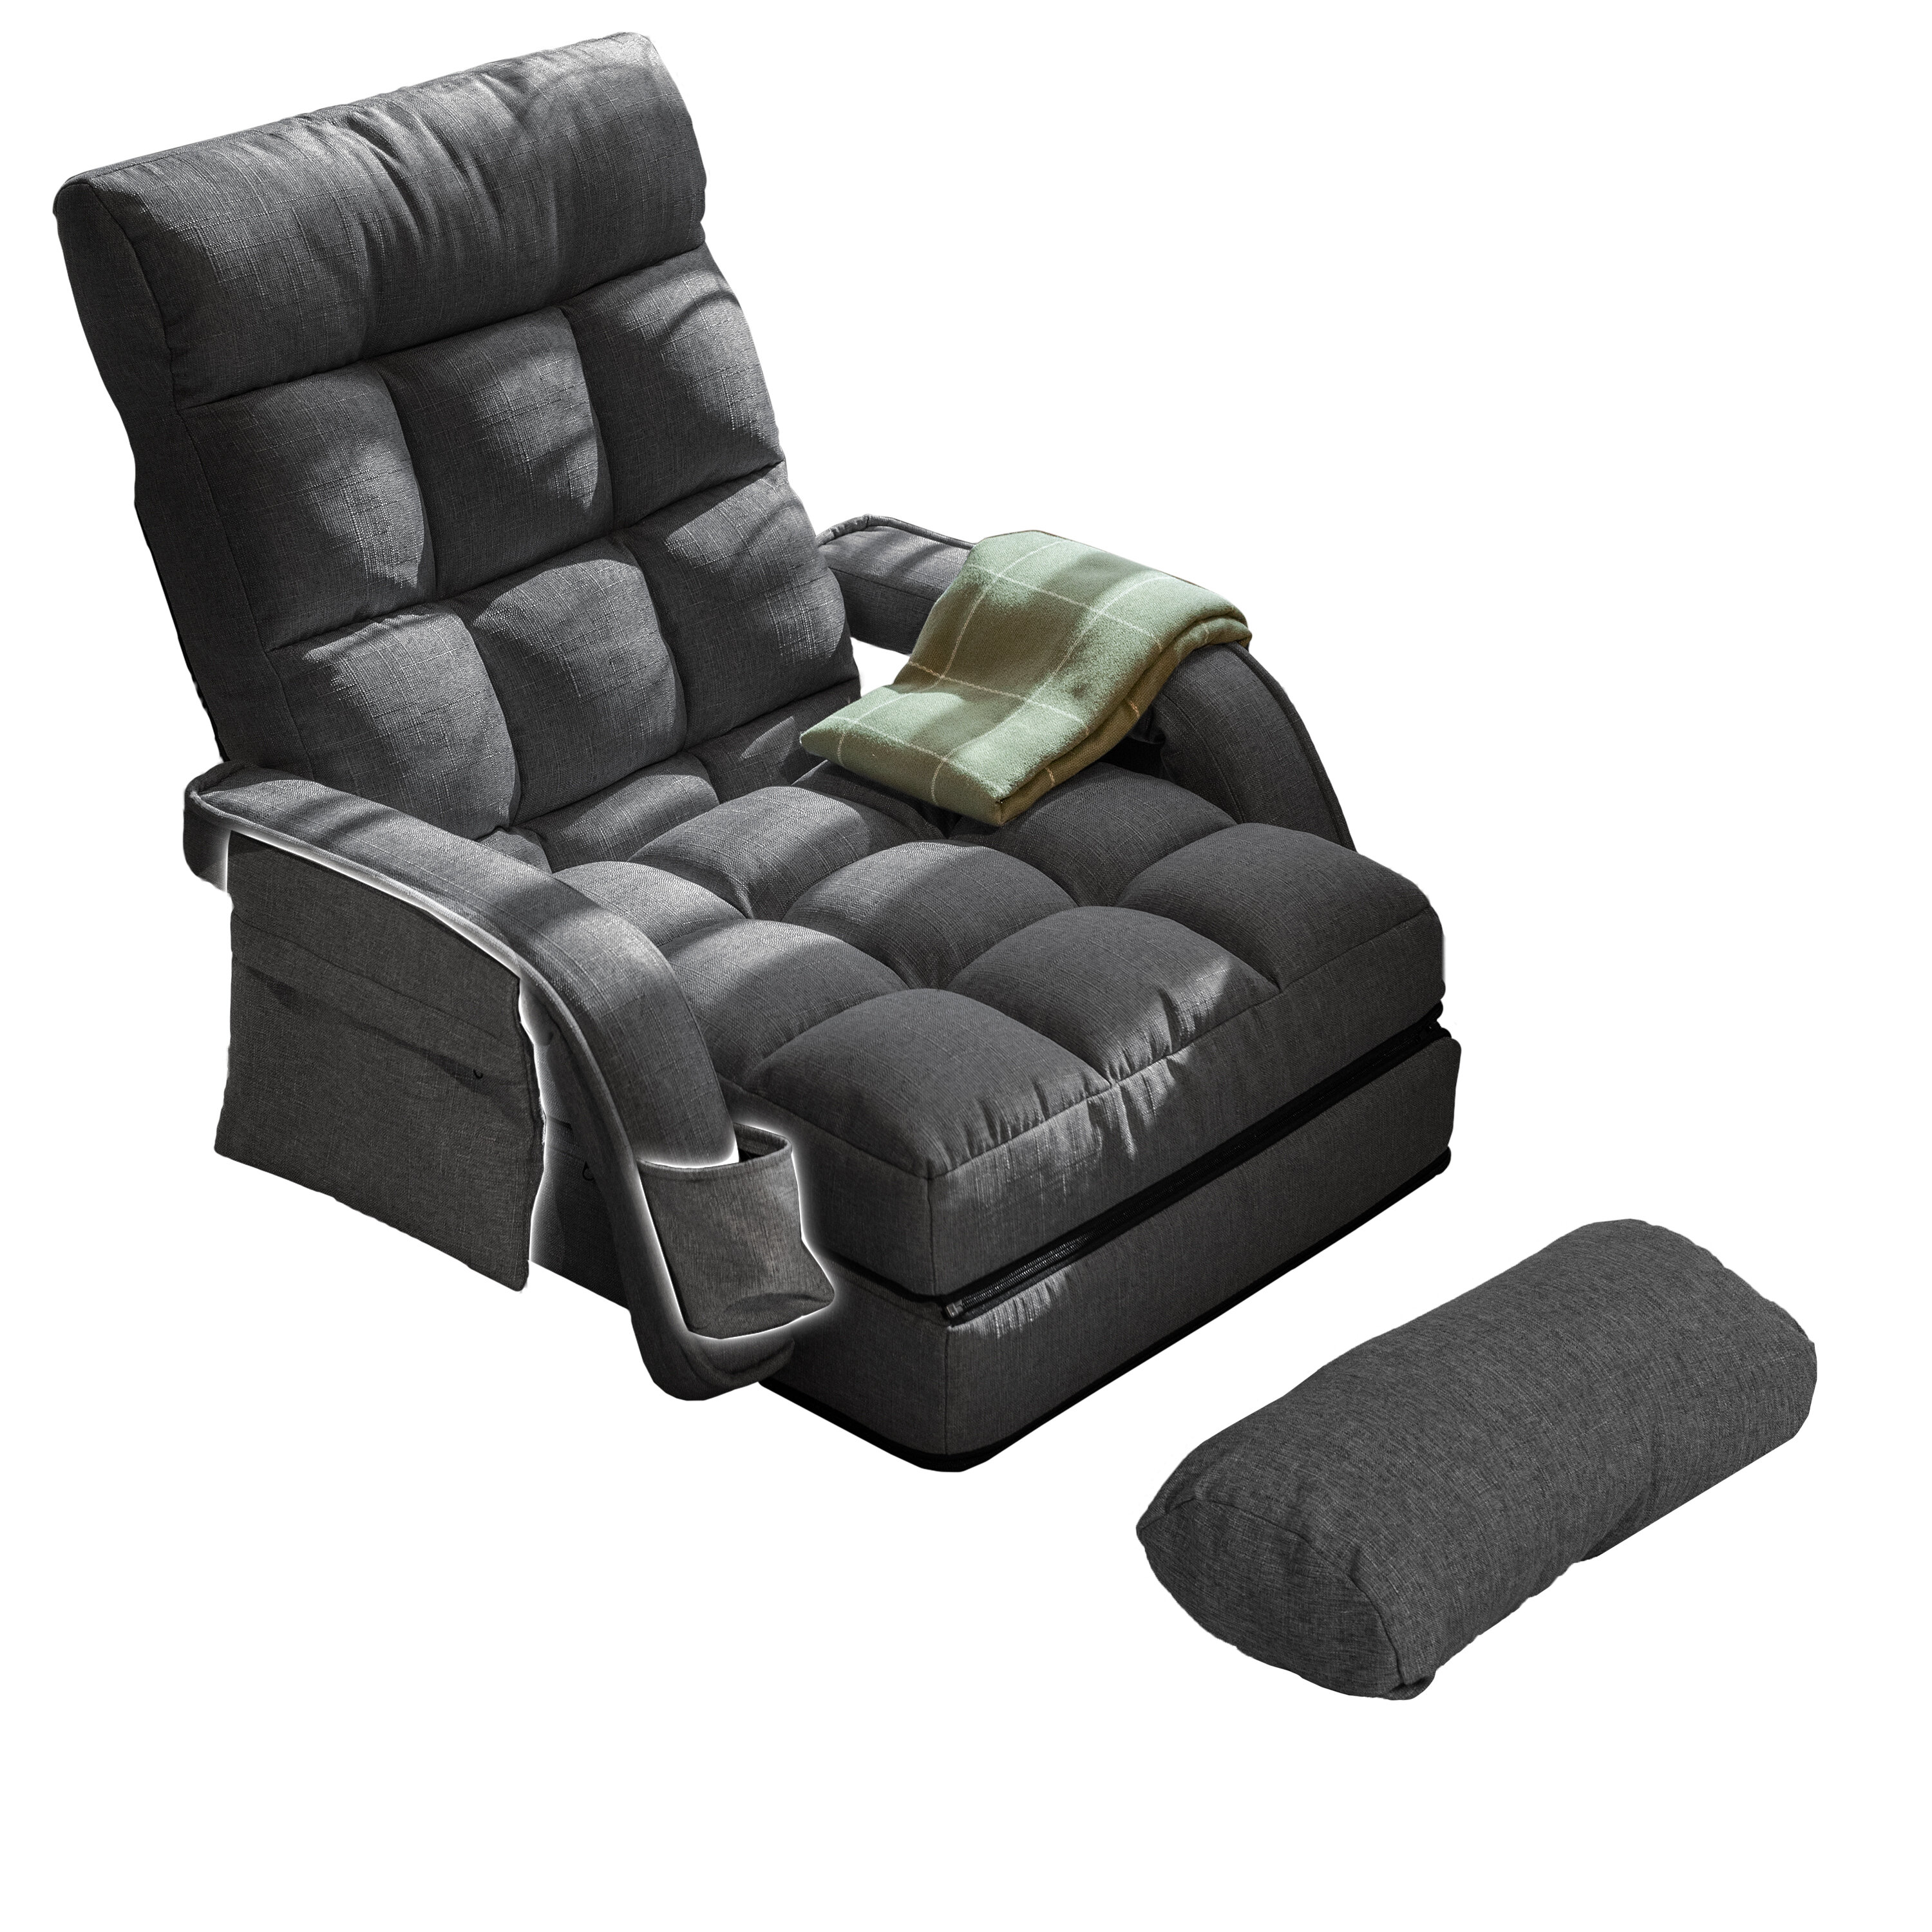 Folding meditation chair, Gaming chair, Arabic majlis seating